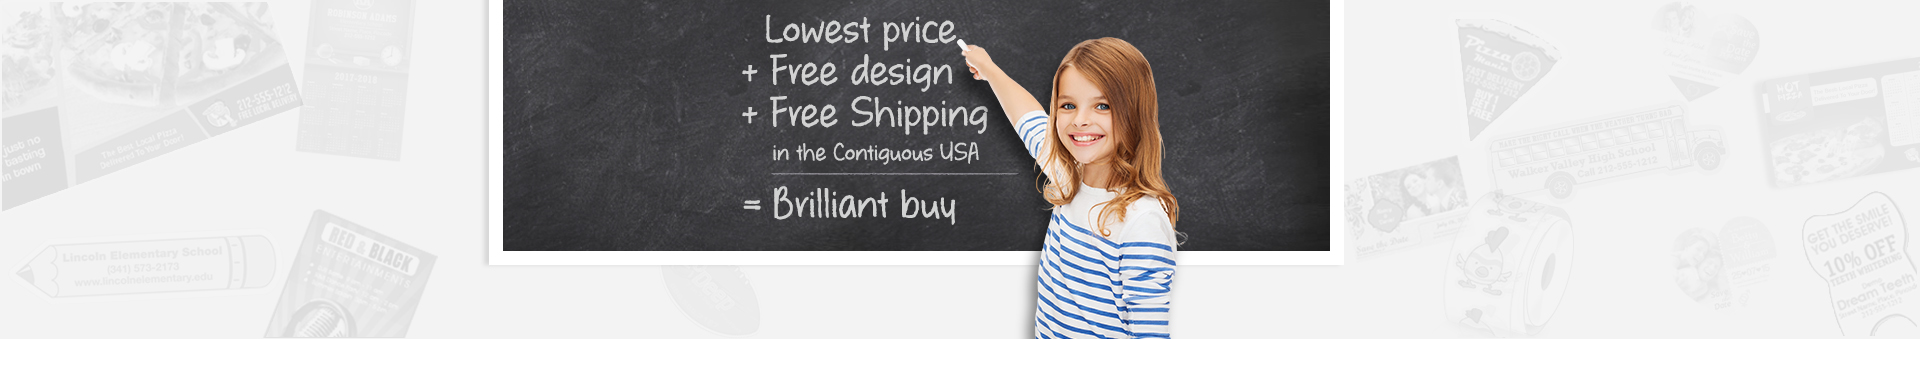 Lowest Price | Free Design 